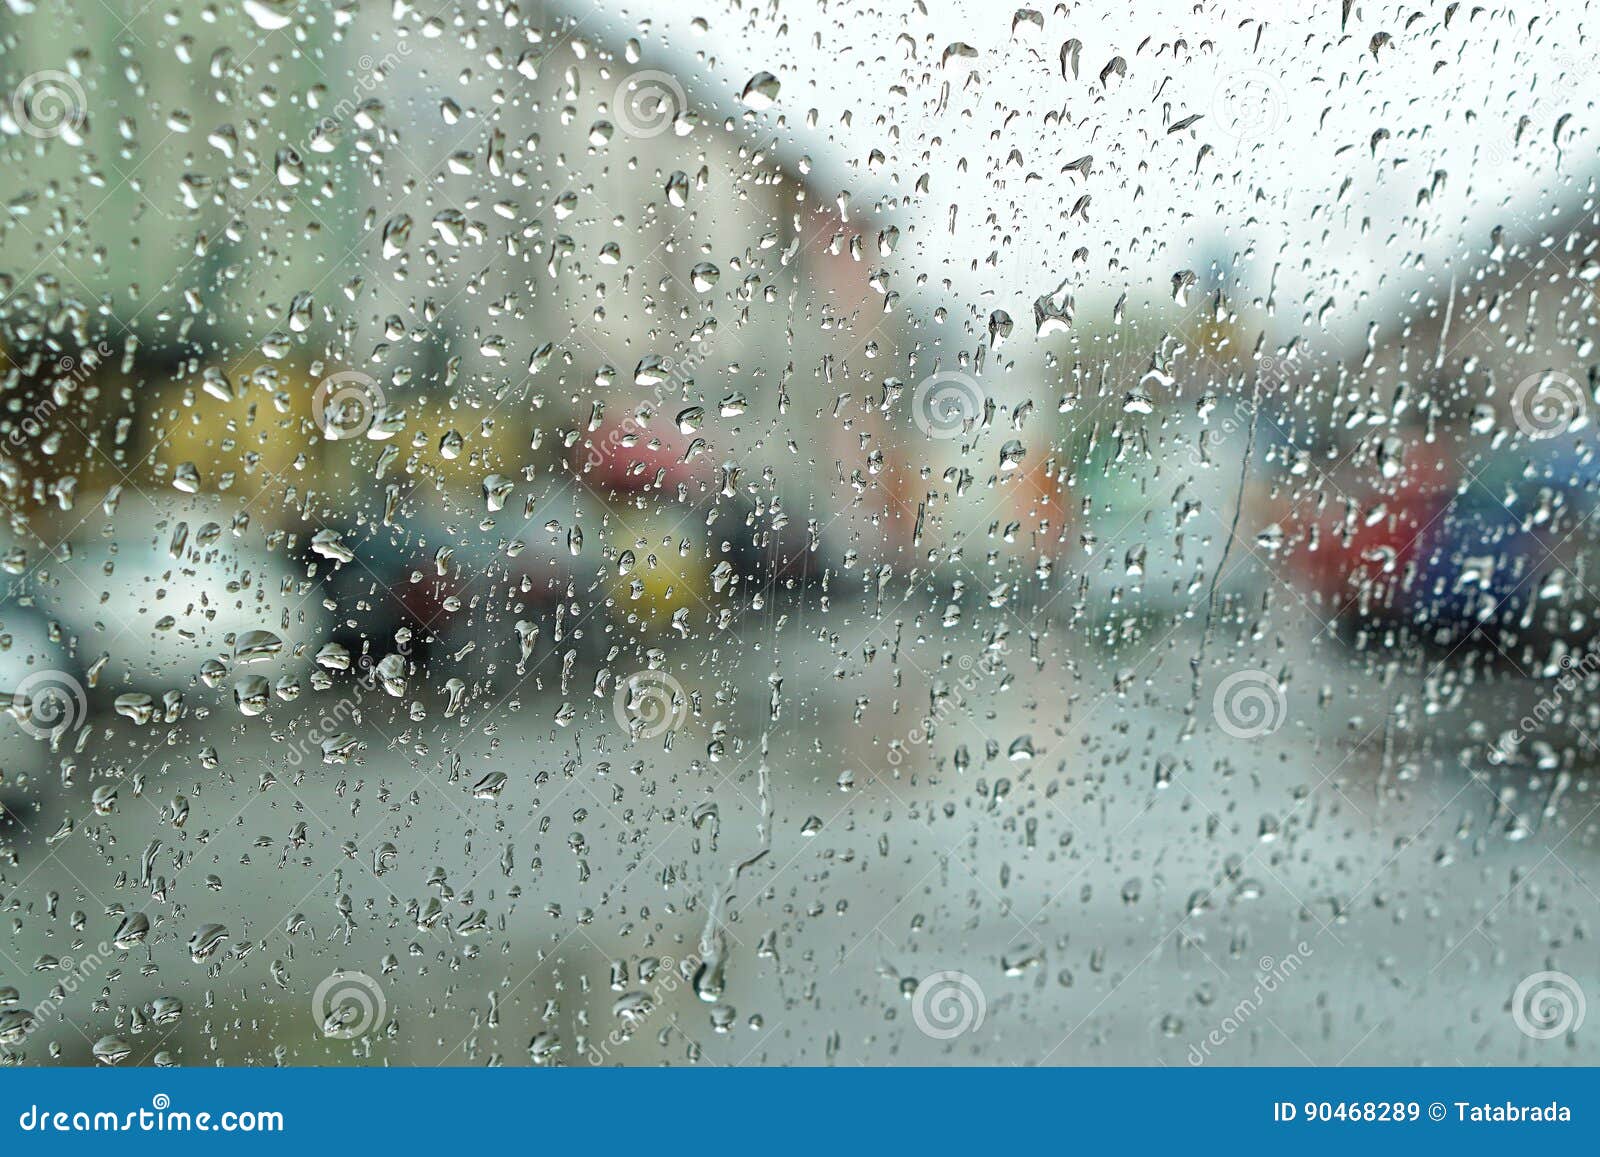 Rainy day weather stock image. Image of blurry, vehicles - 90468289